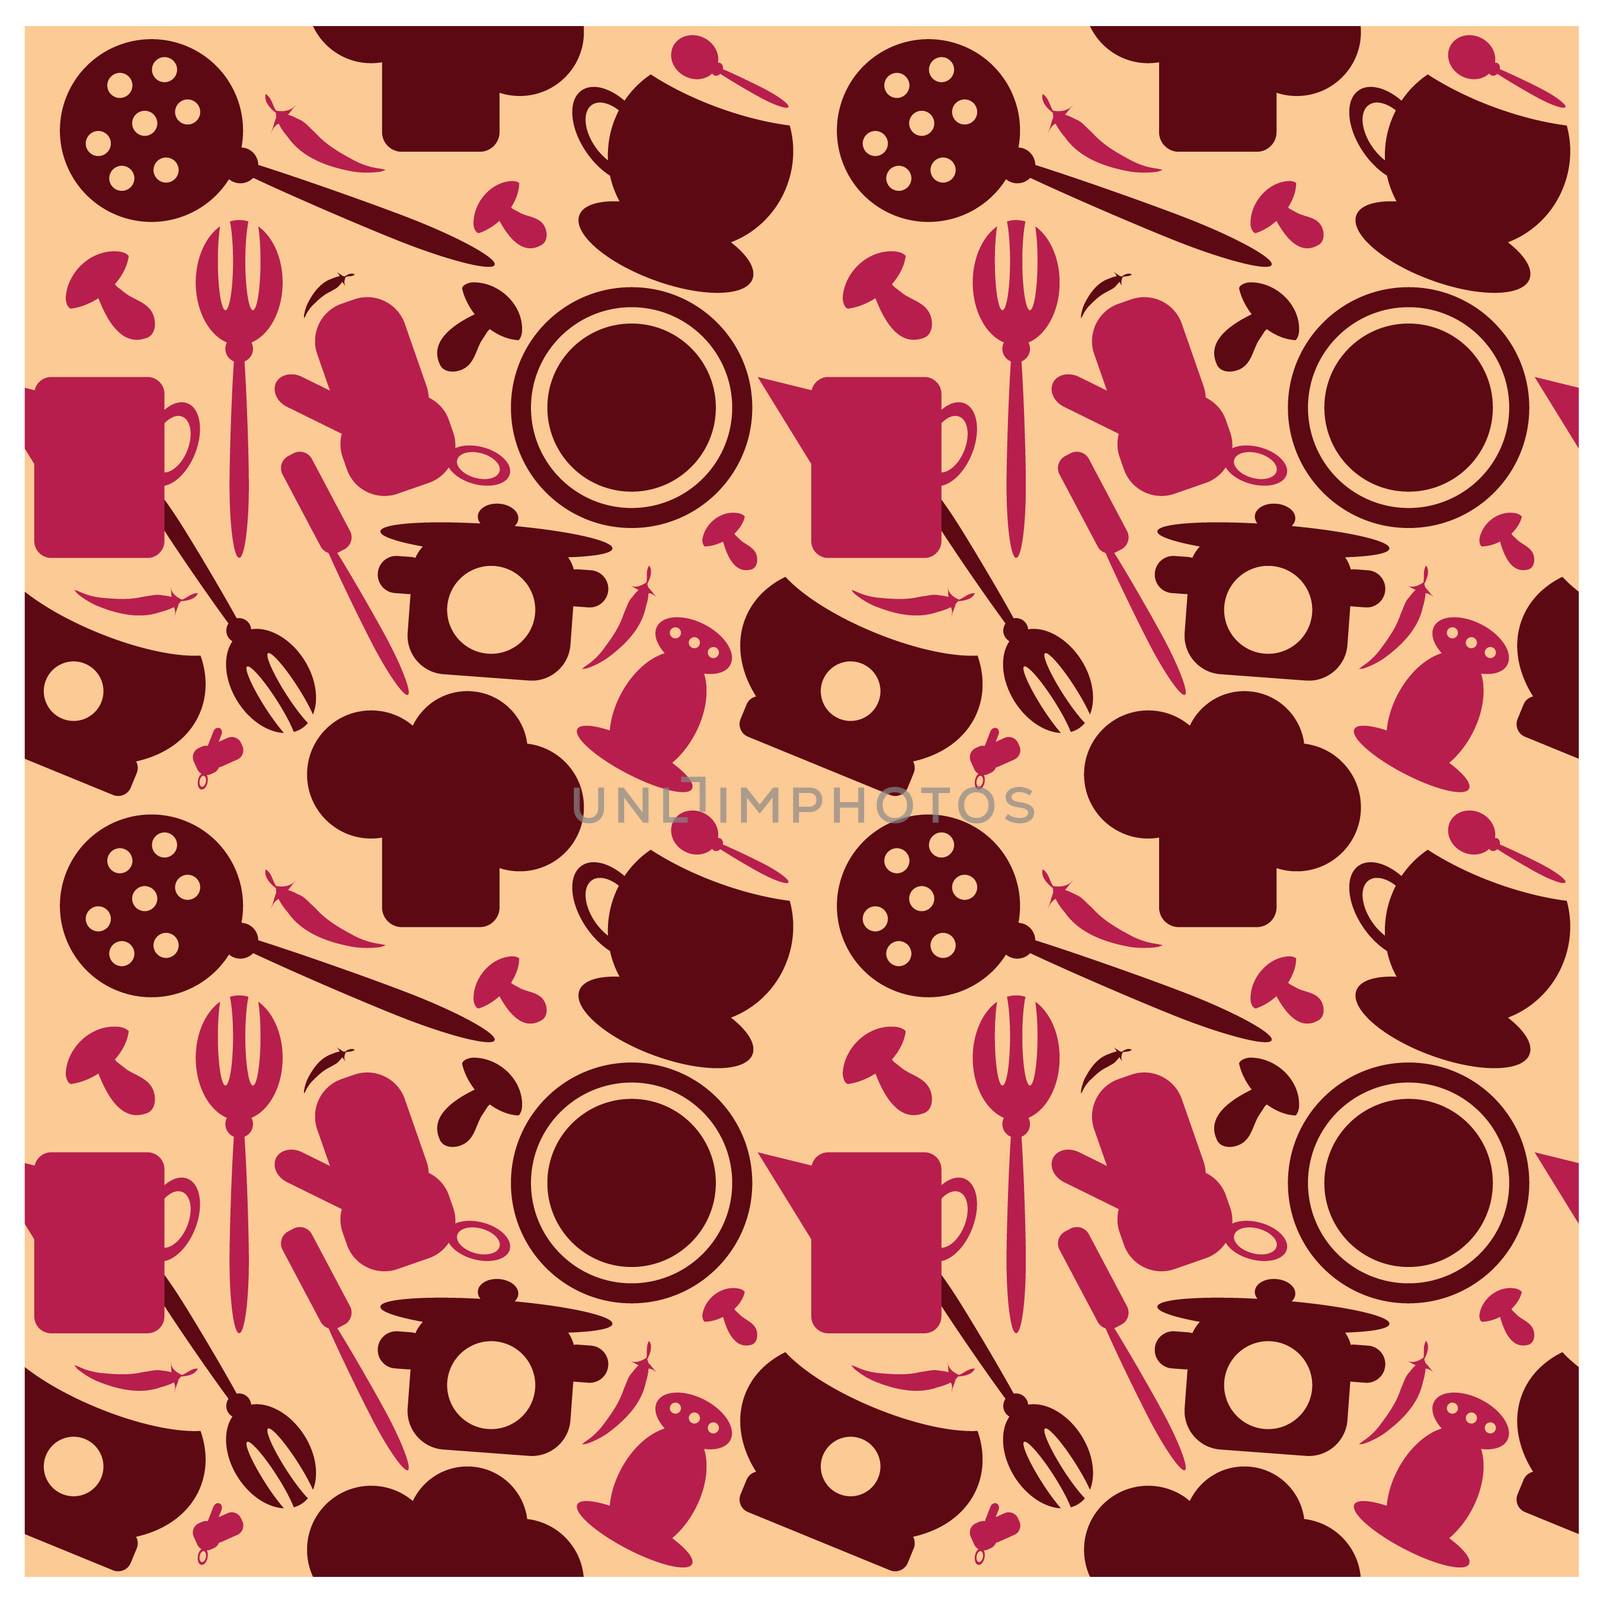 Background seamless kitchen pattern. vector illustration